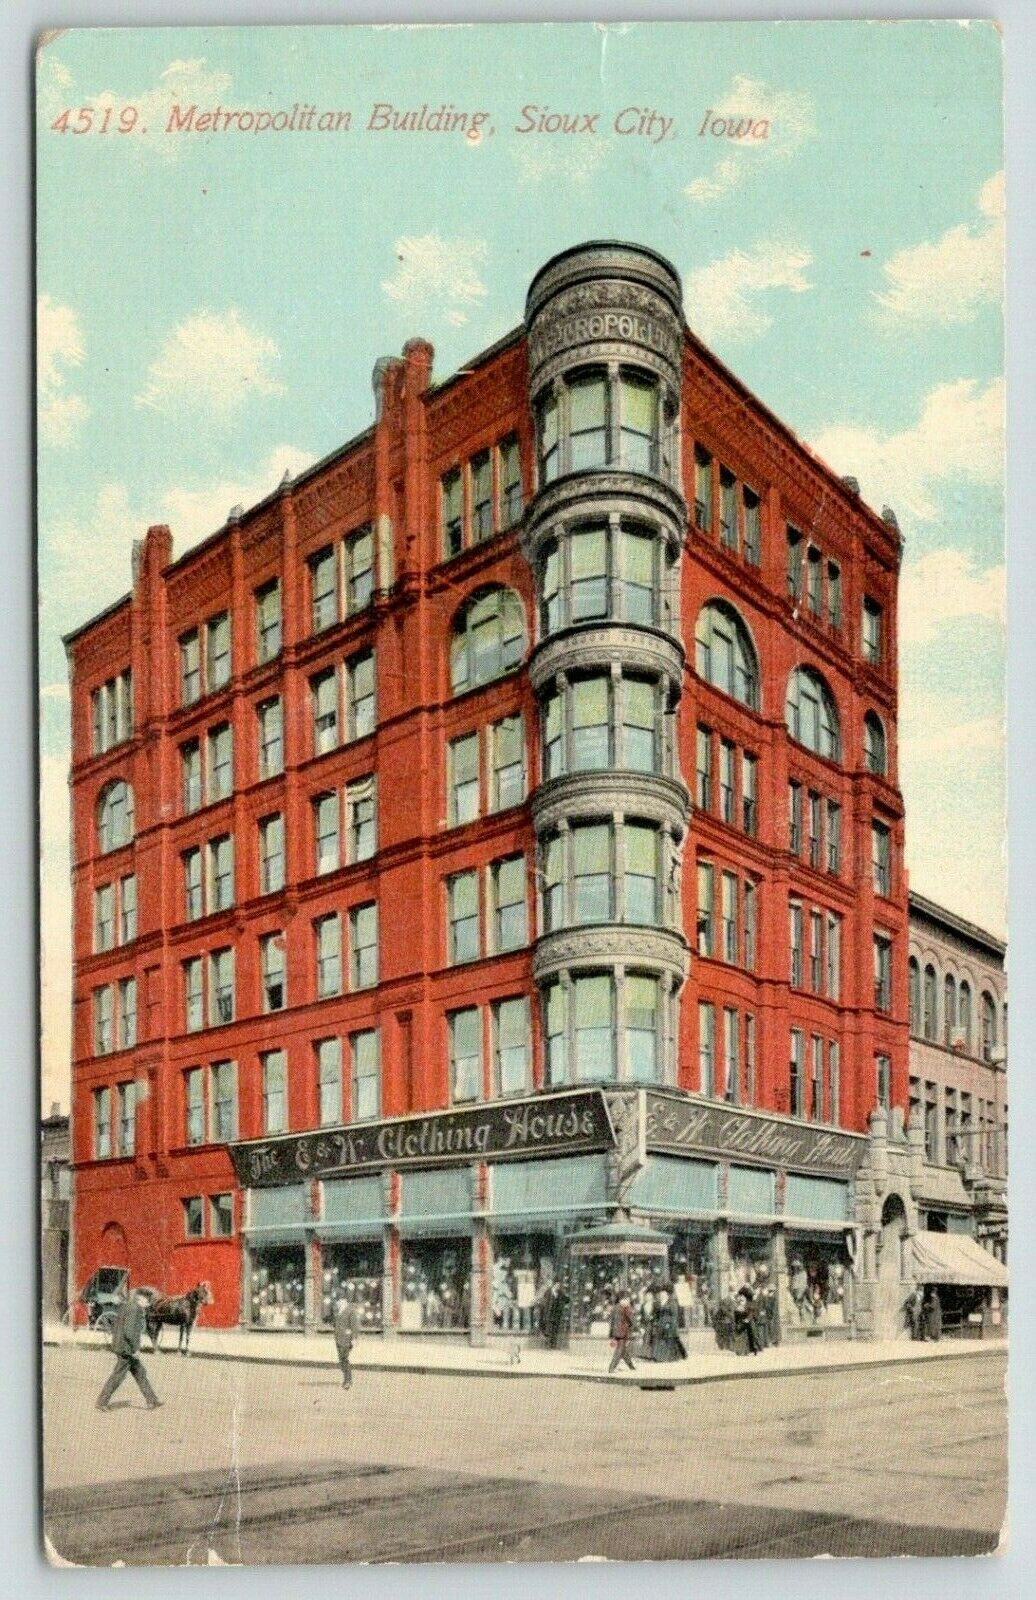 E&W_Clothing_House_Sioux_City_1911.jpg